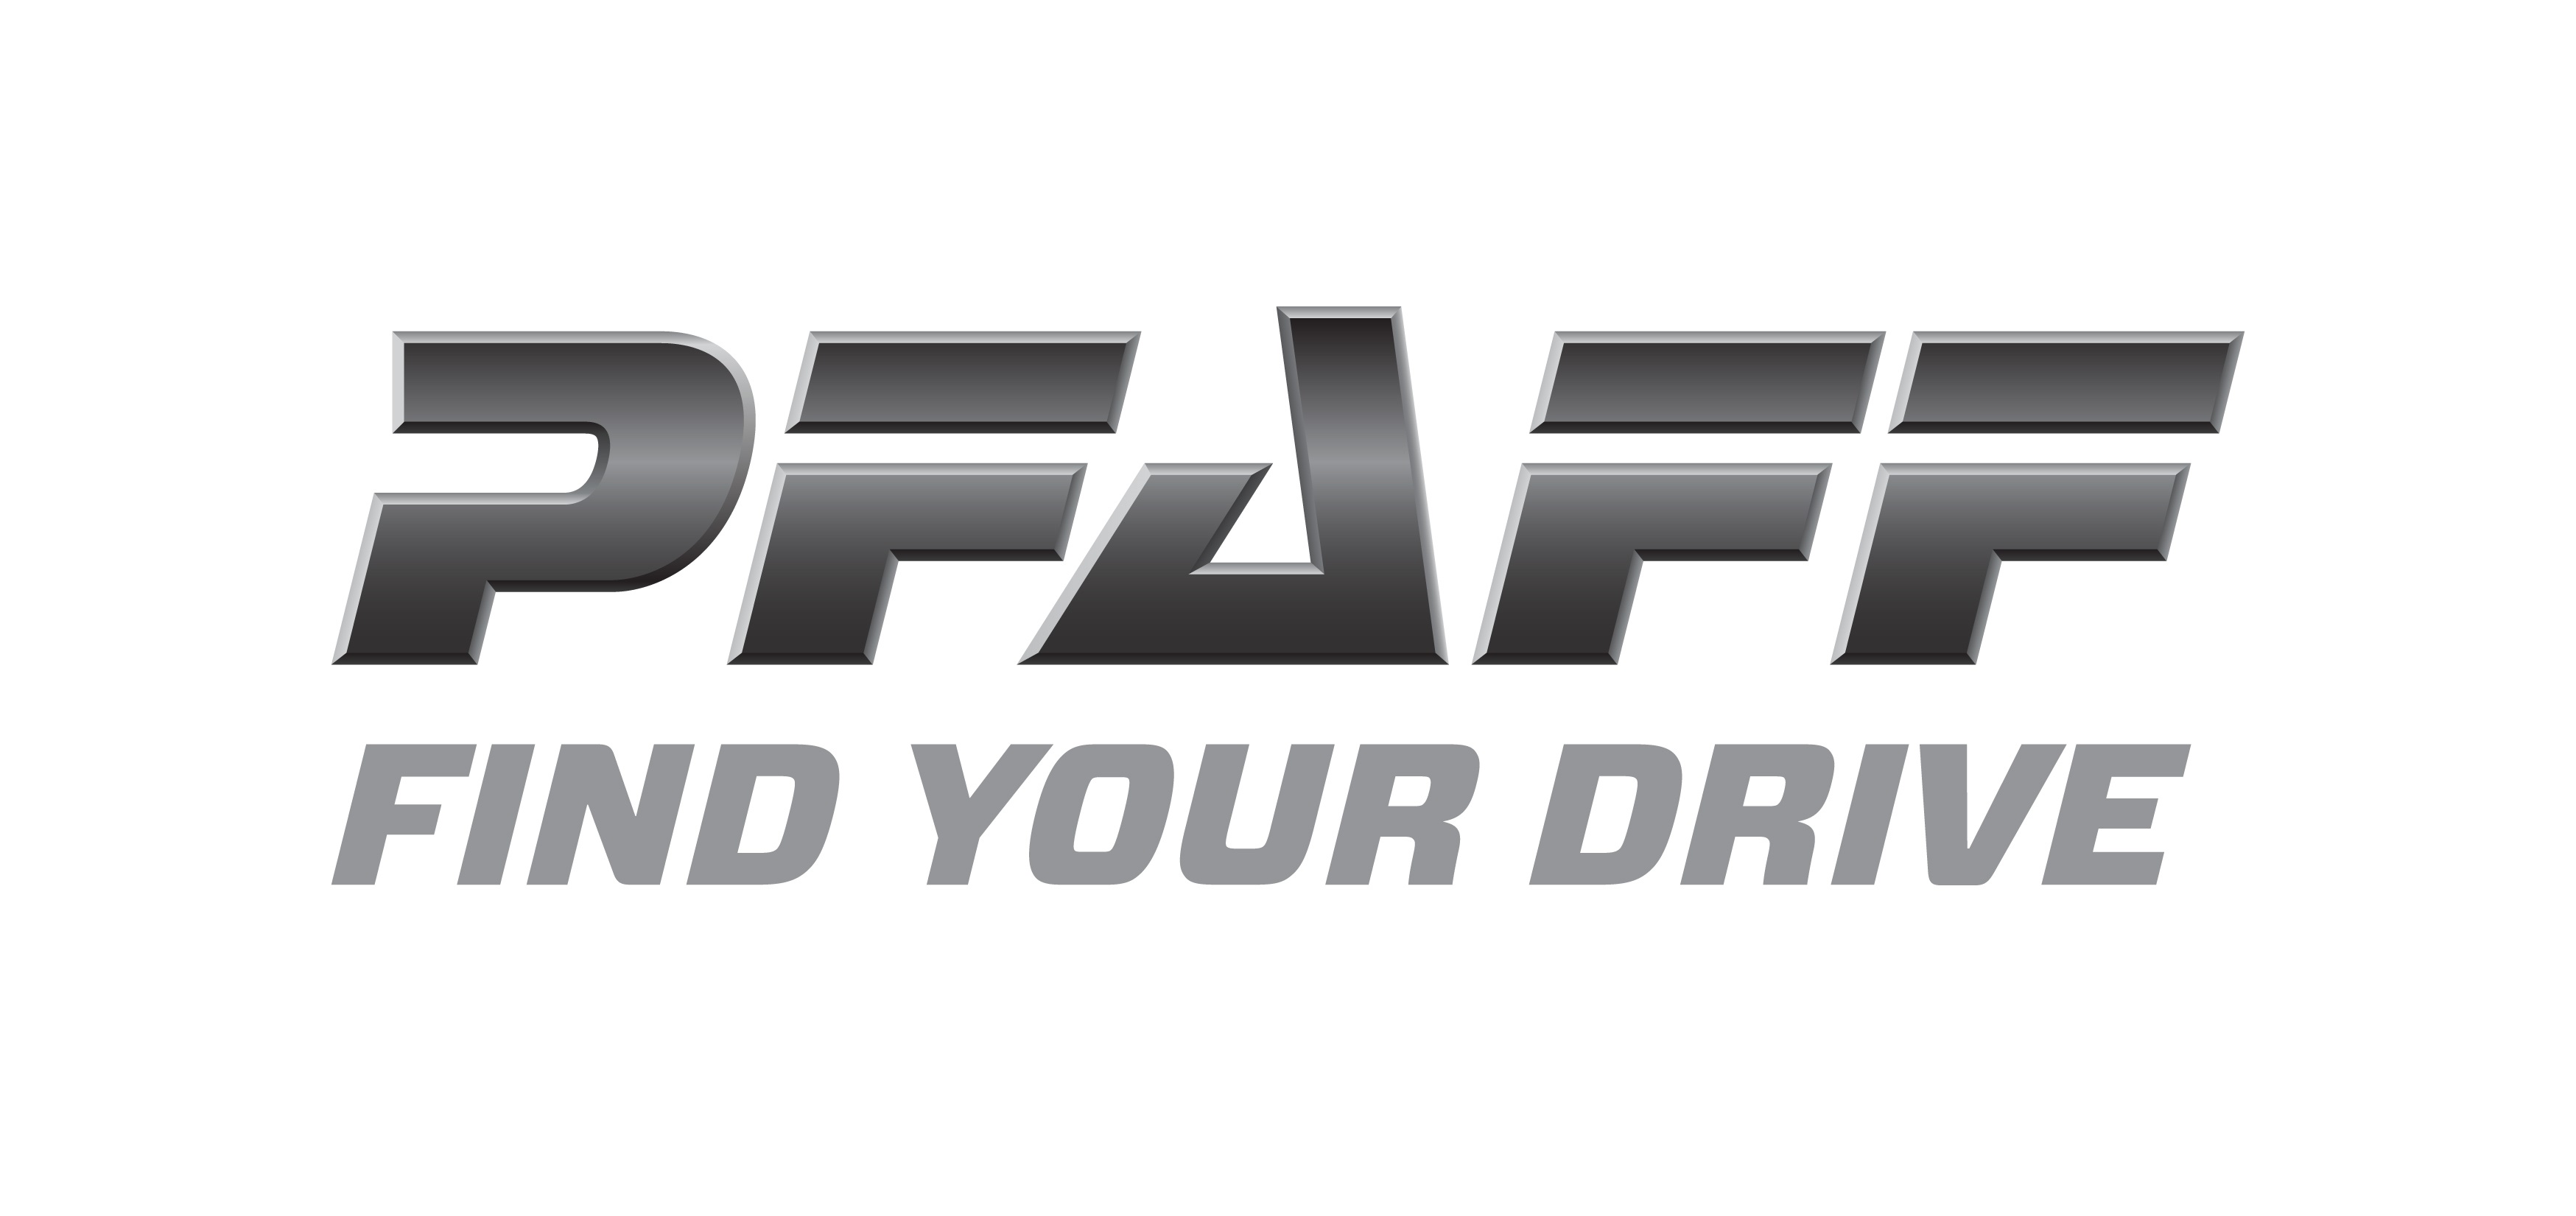 PFAFF Find your drive